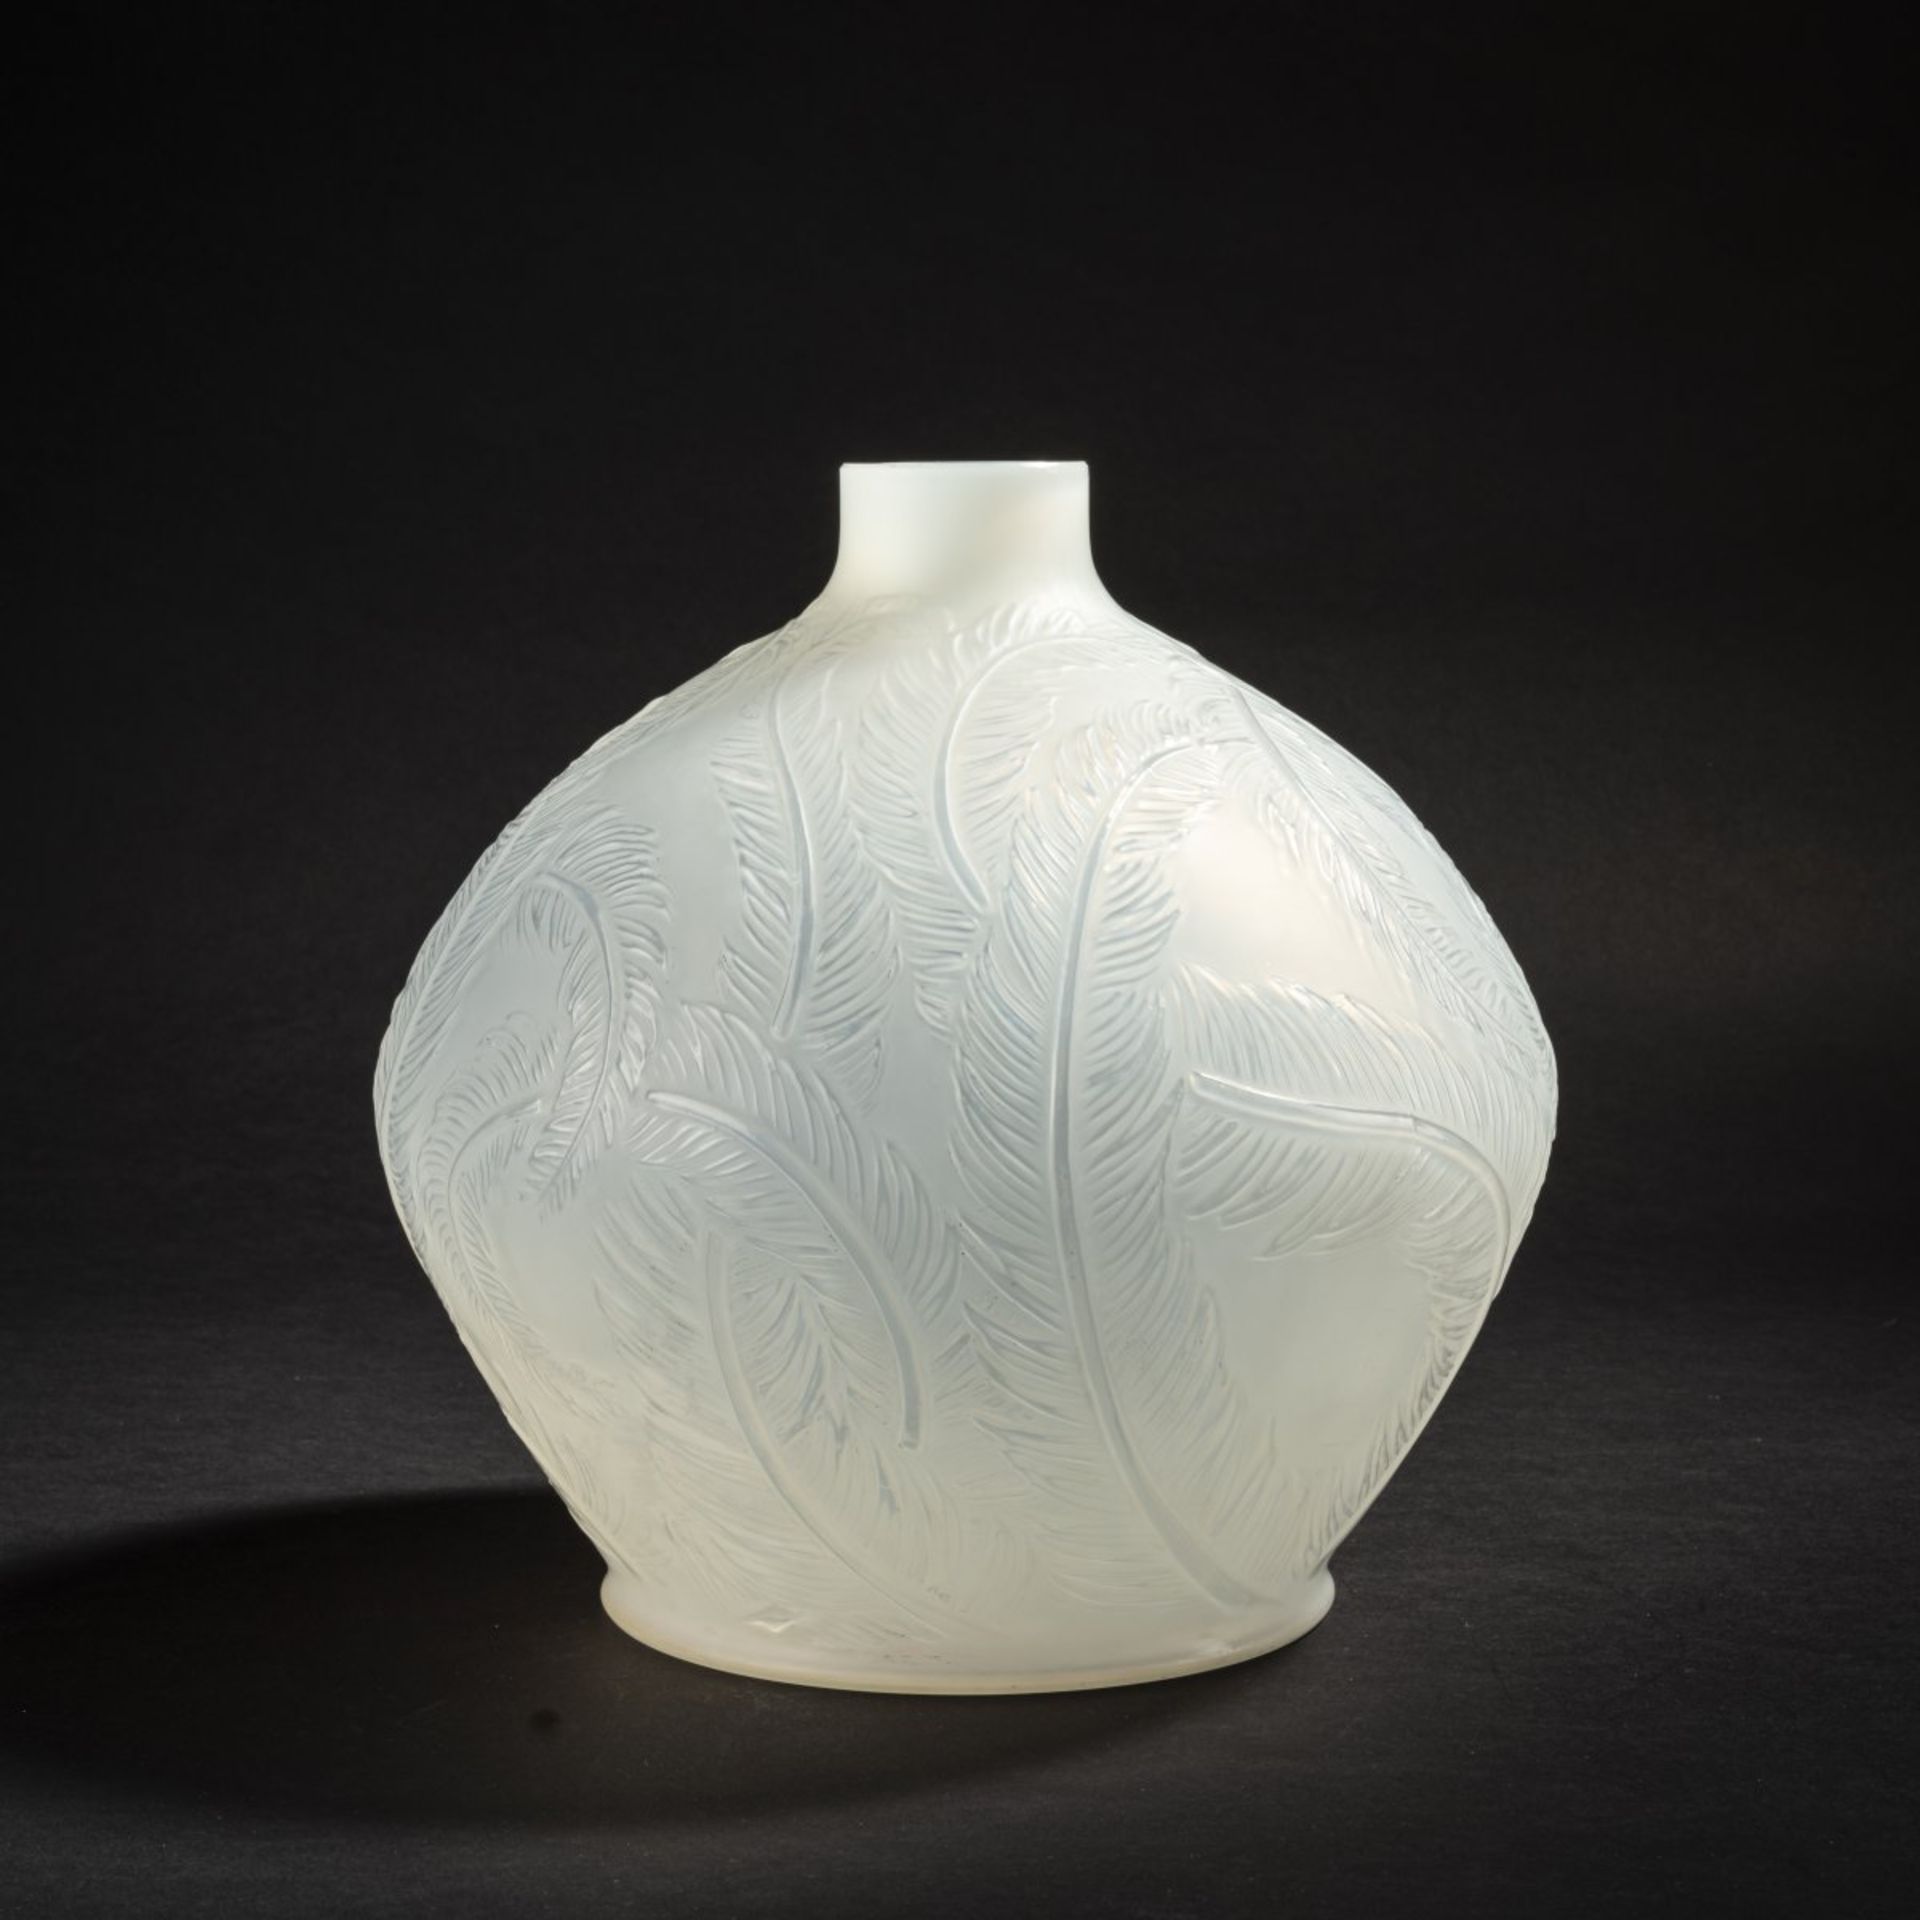 Suzanne Lalique, Vase 'Plumes', 1920 - Image 3 of 4